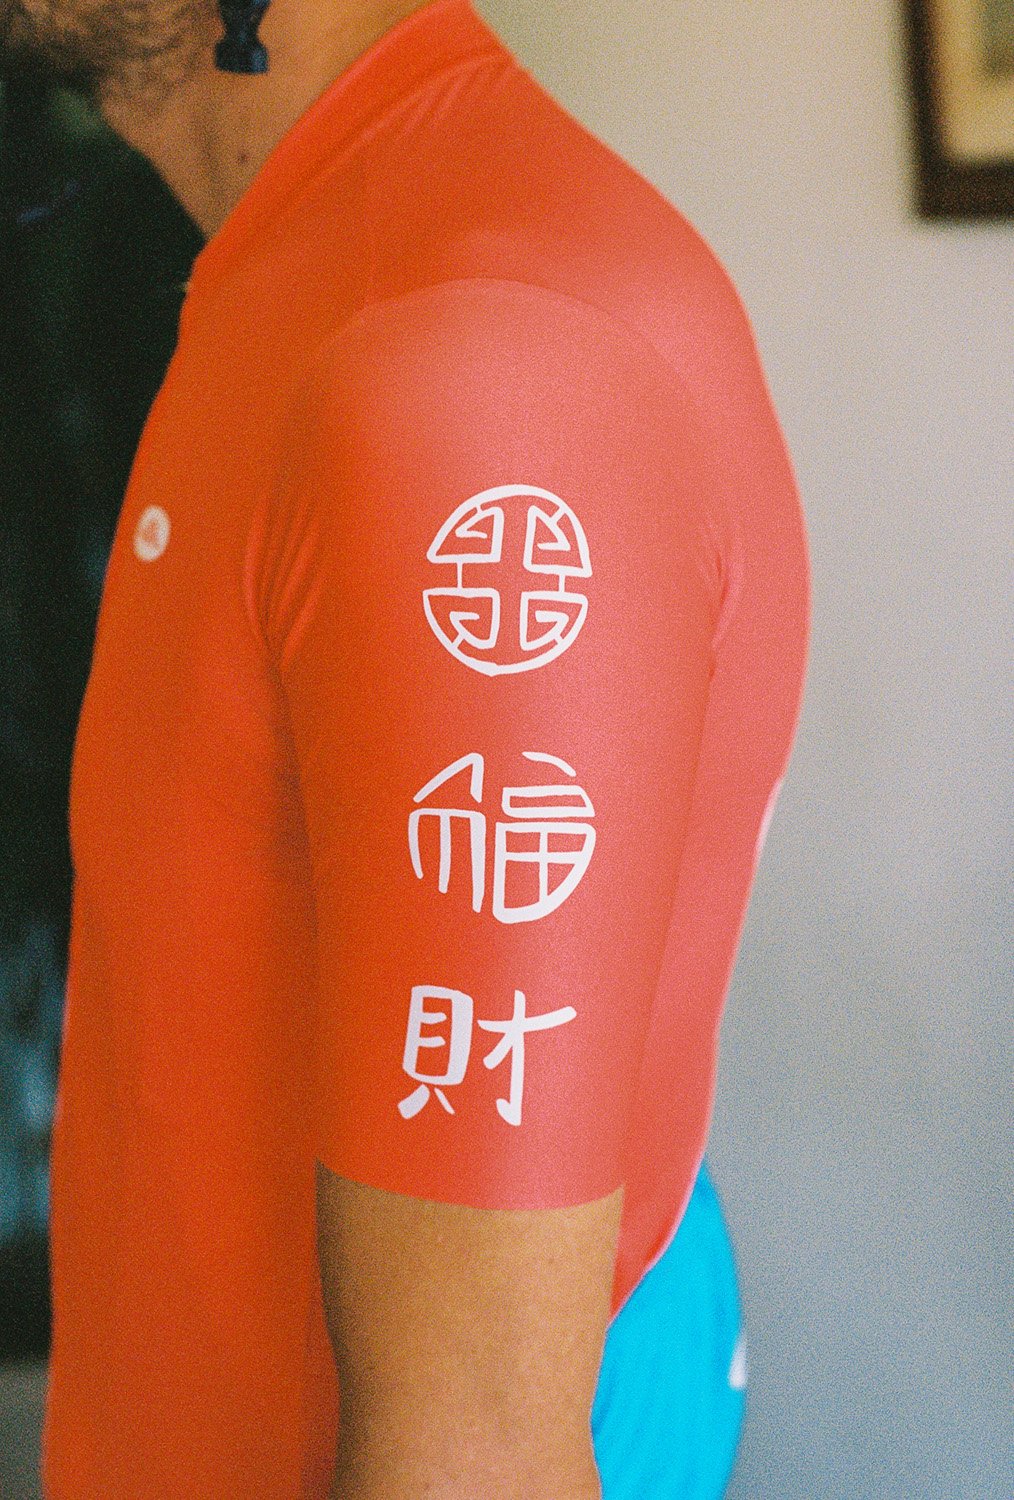 A cycling jersey